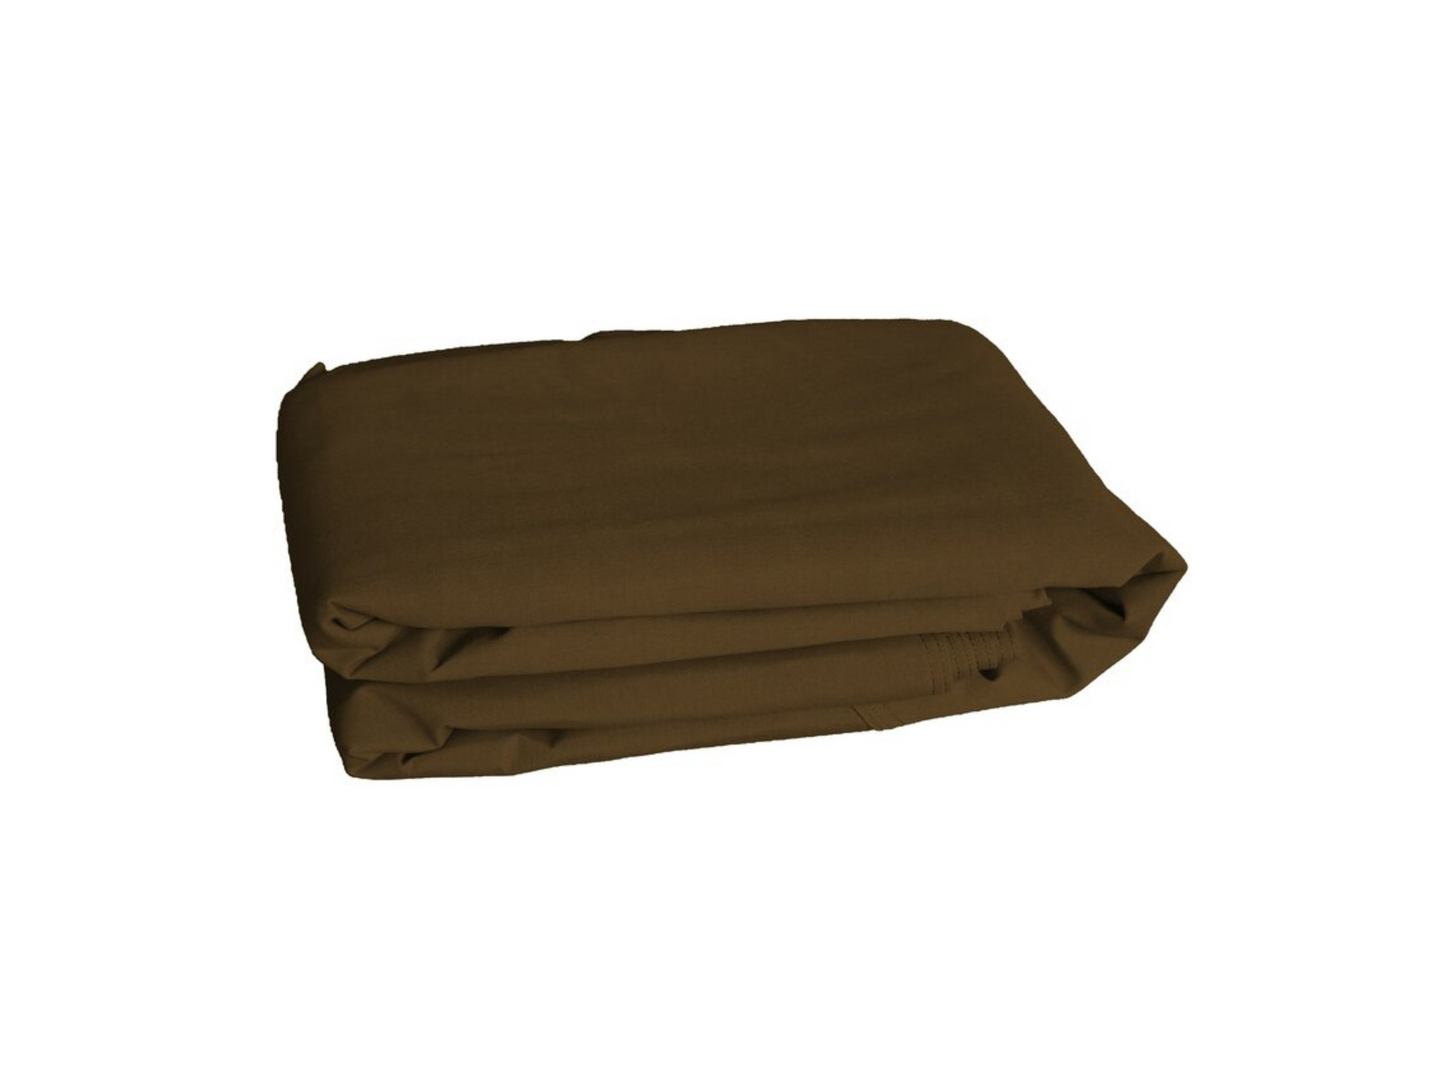 Replacement Canopy for Kingsbury Gazebo (GZ584), Sunbrella® Fabric in Cocoa